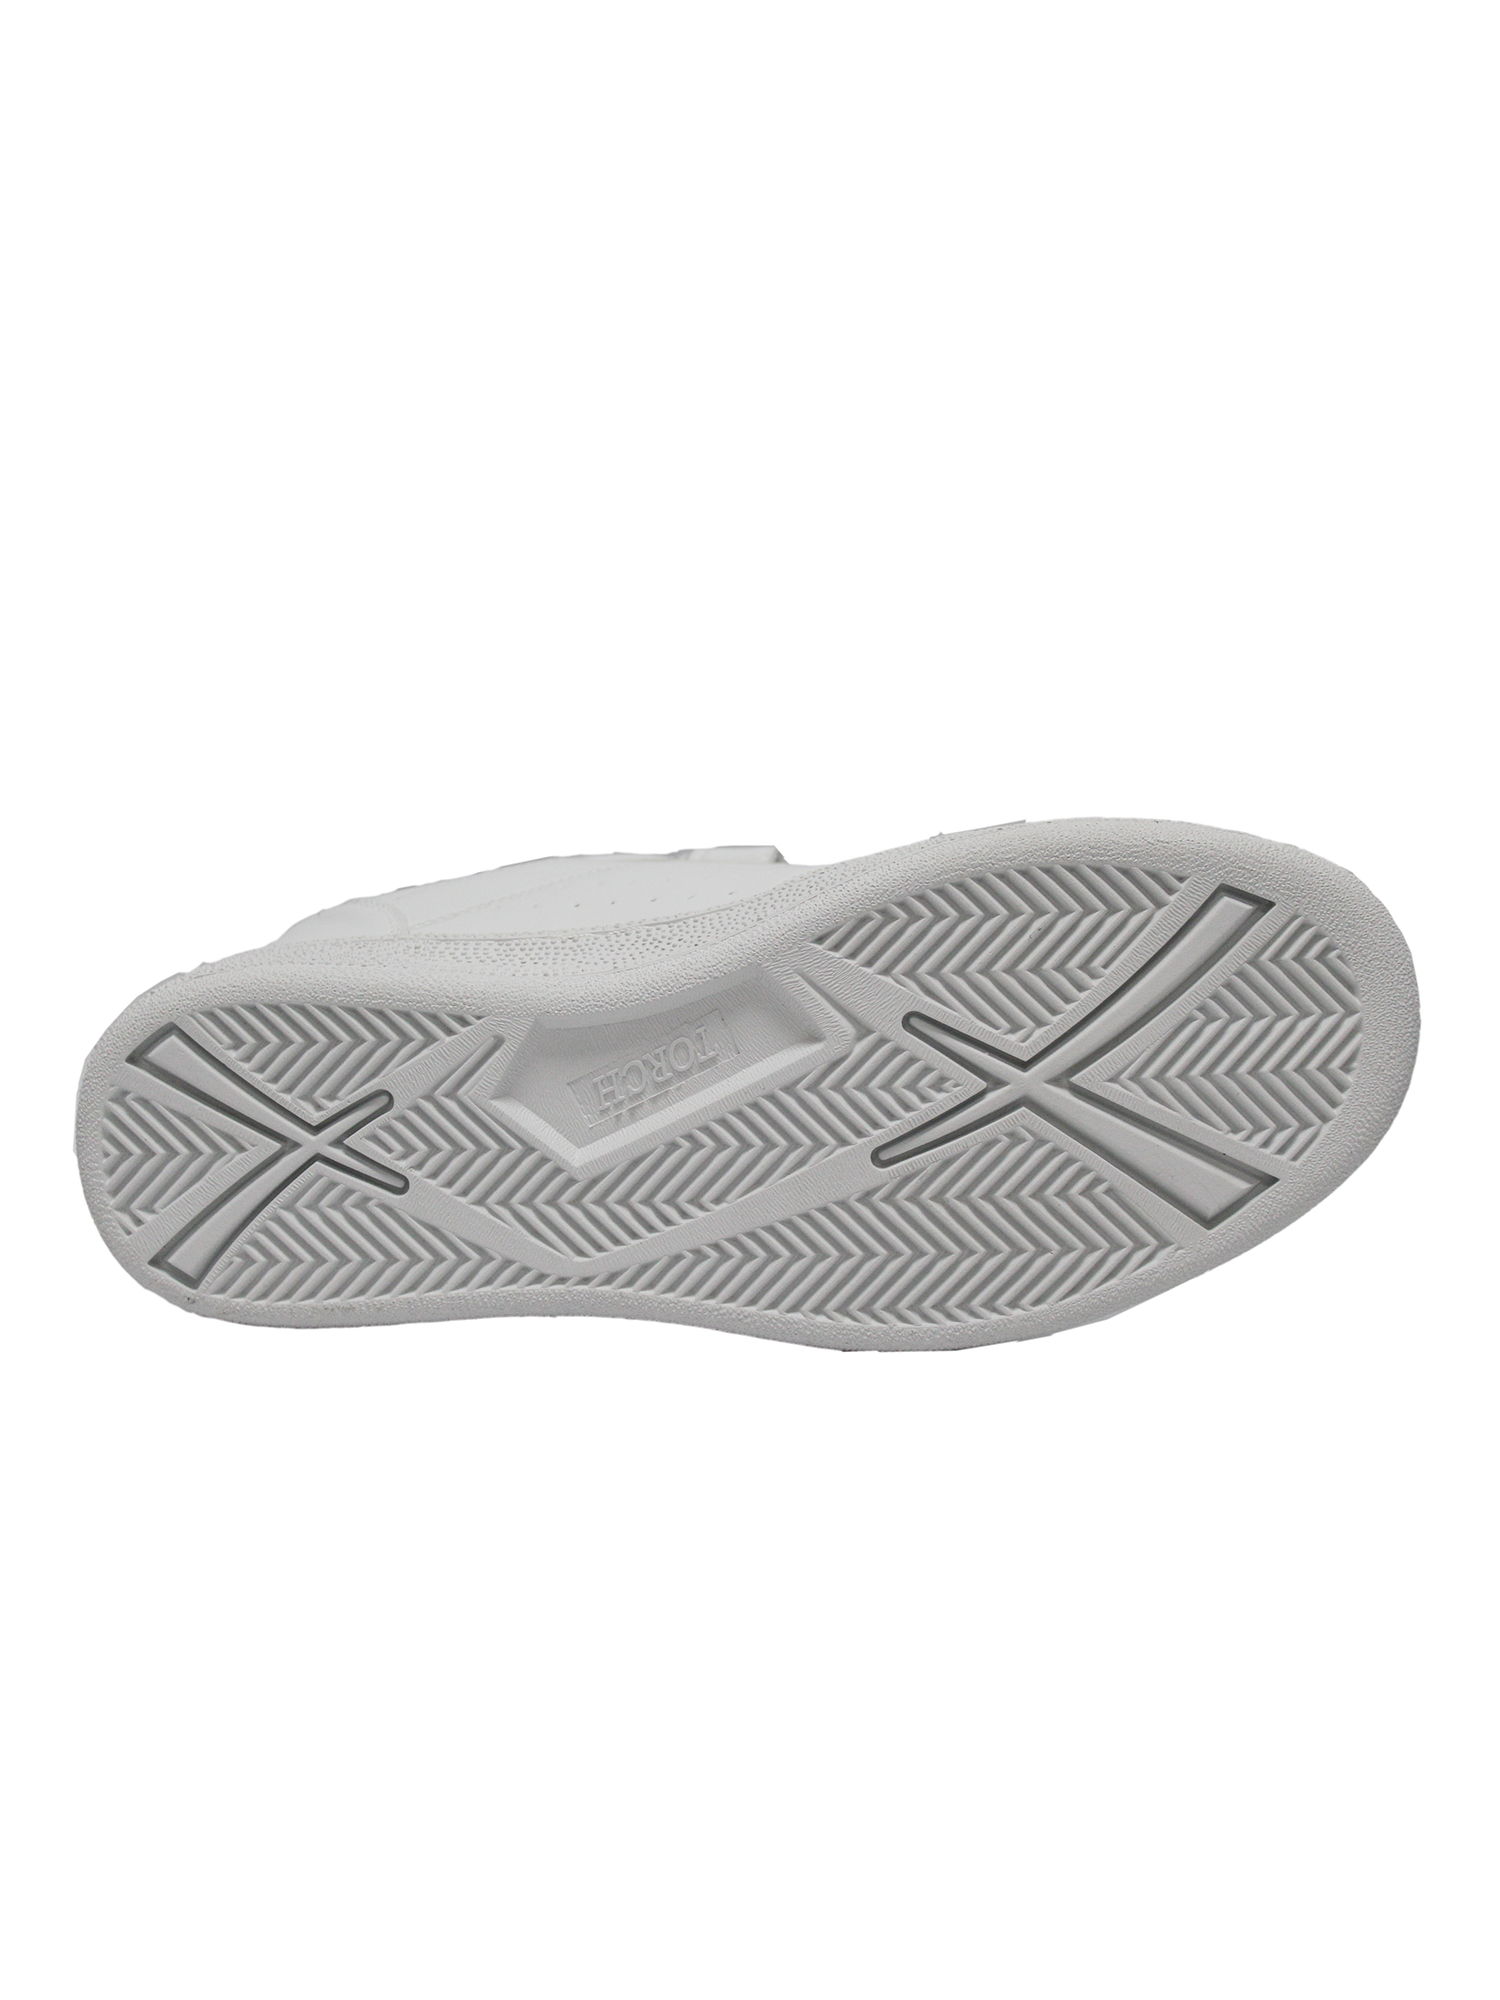 Tanleewa Men's Leather Strap Sneakers Lightweight Hook and Loop Walking Shoe Size 8.5 Adult Male - image 4 of 5